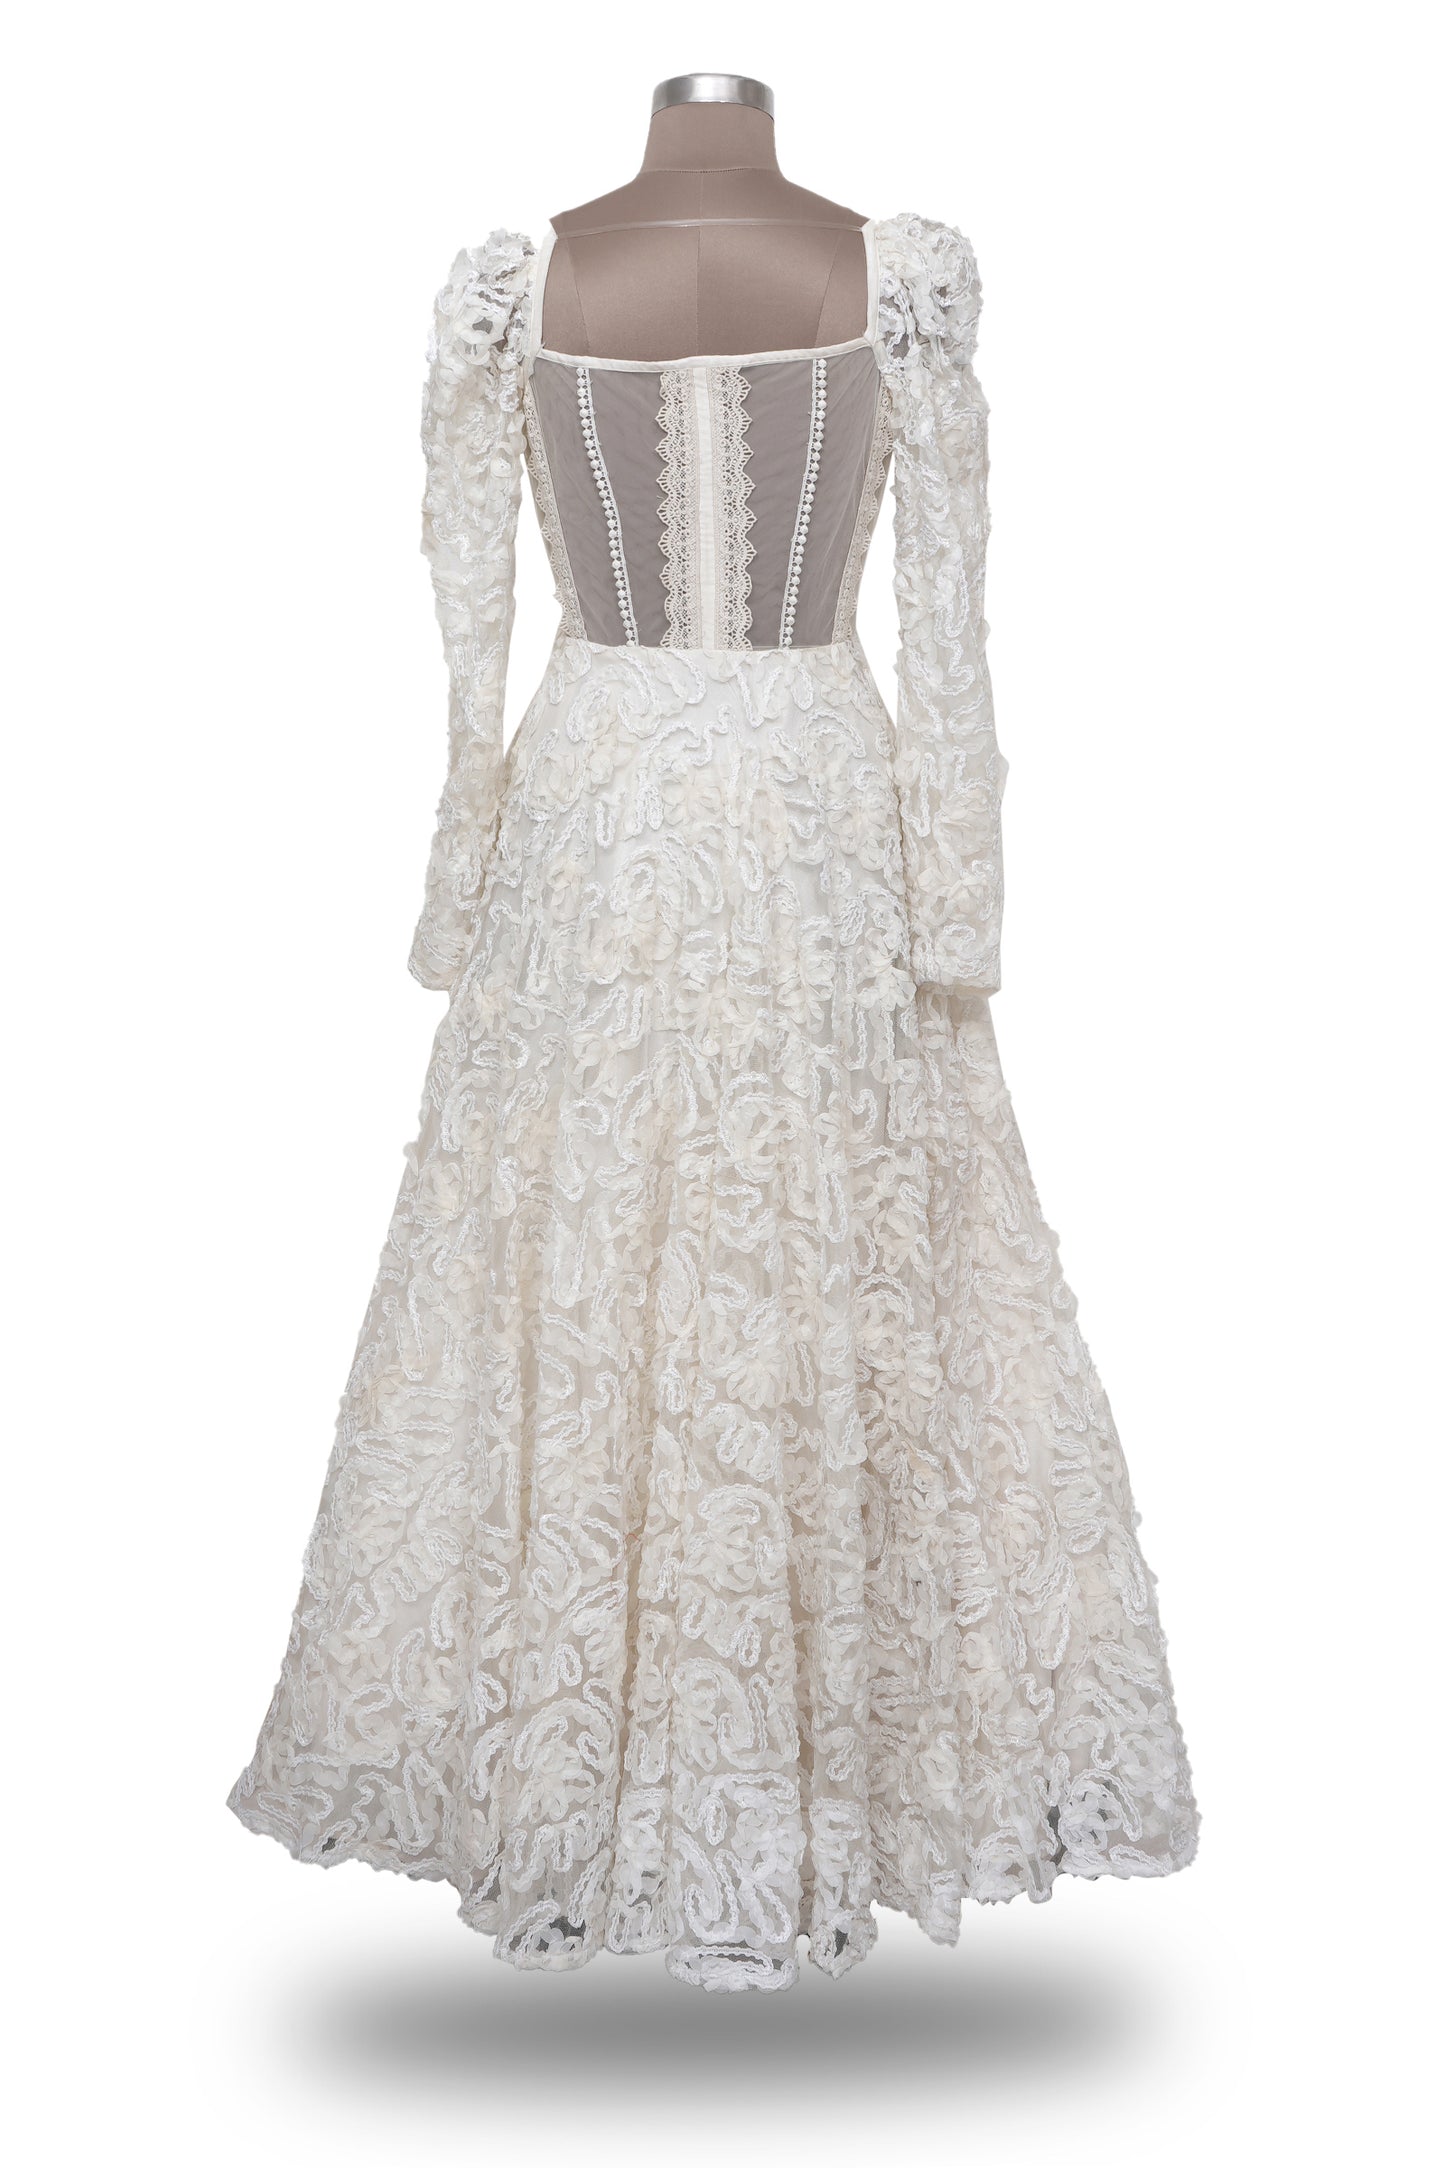 "The Enchanting Elysian Lace Dress: A Breatheenmoda Masterpiece"